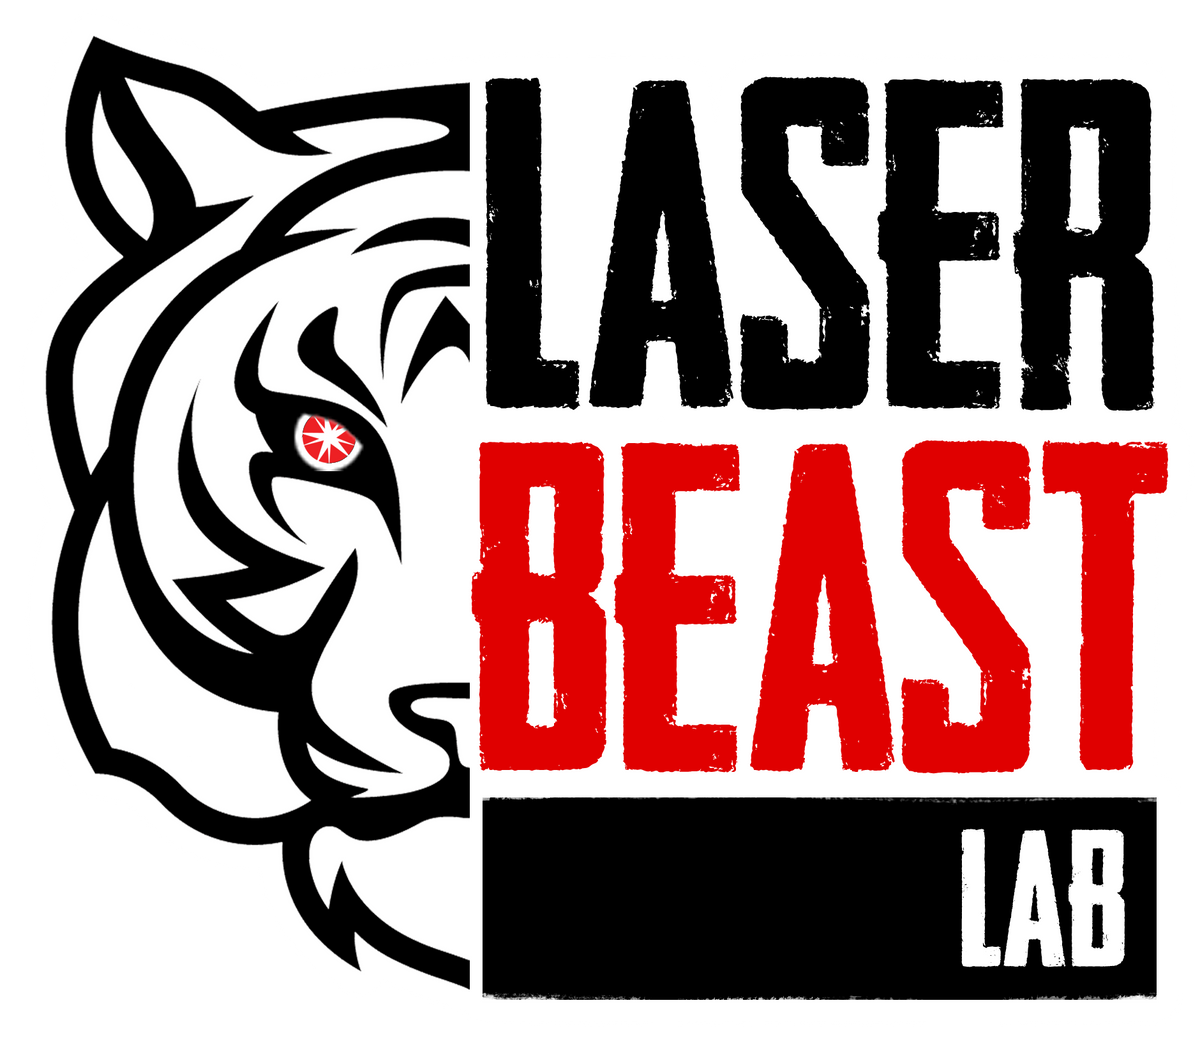 7RGB LED Lamp Black Base w/ Remote and USB Cord – LaserBeast Lab